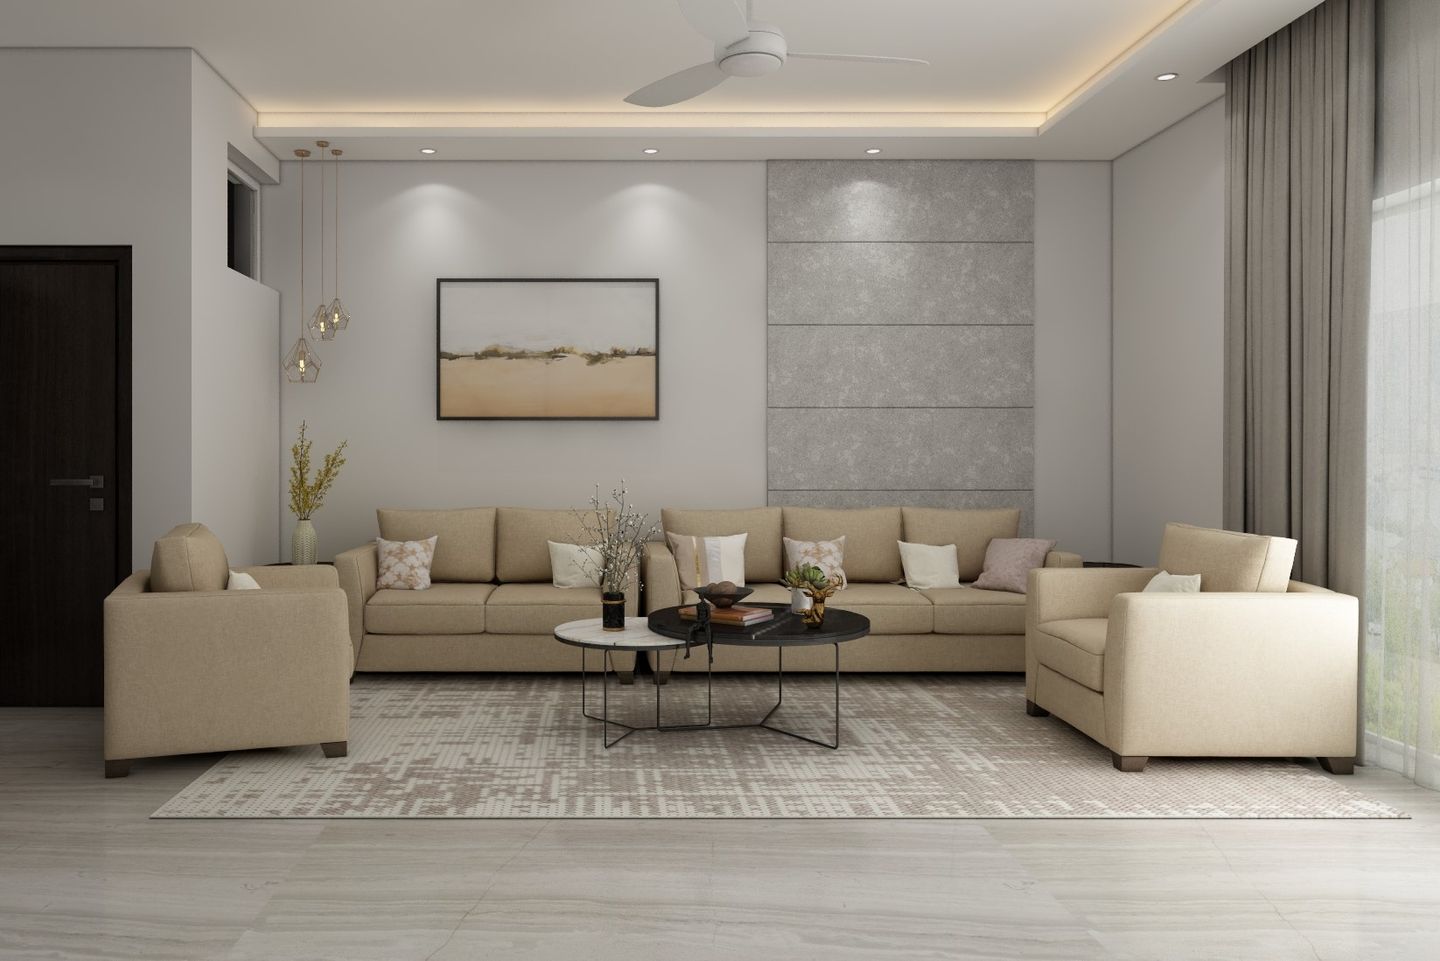 Living Room Design With Pendant Lights - Livspace